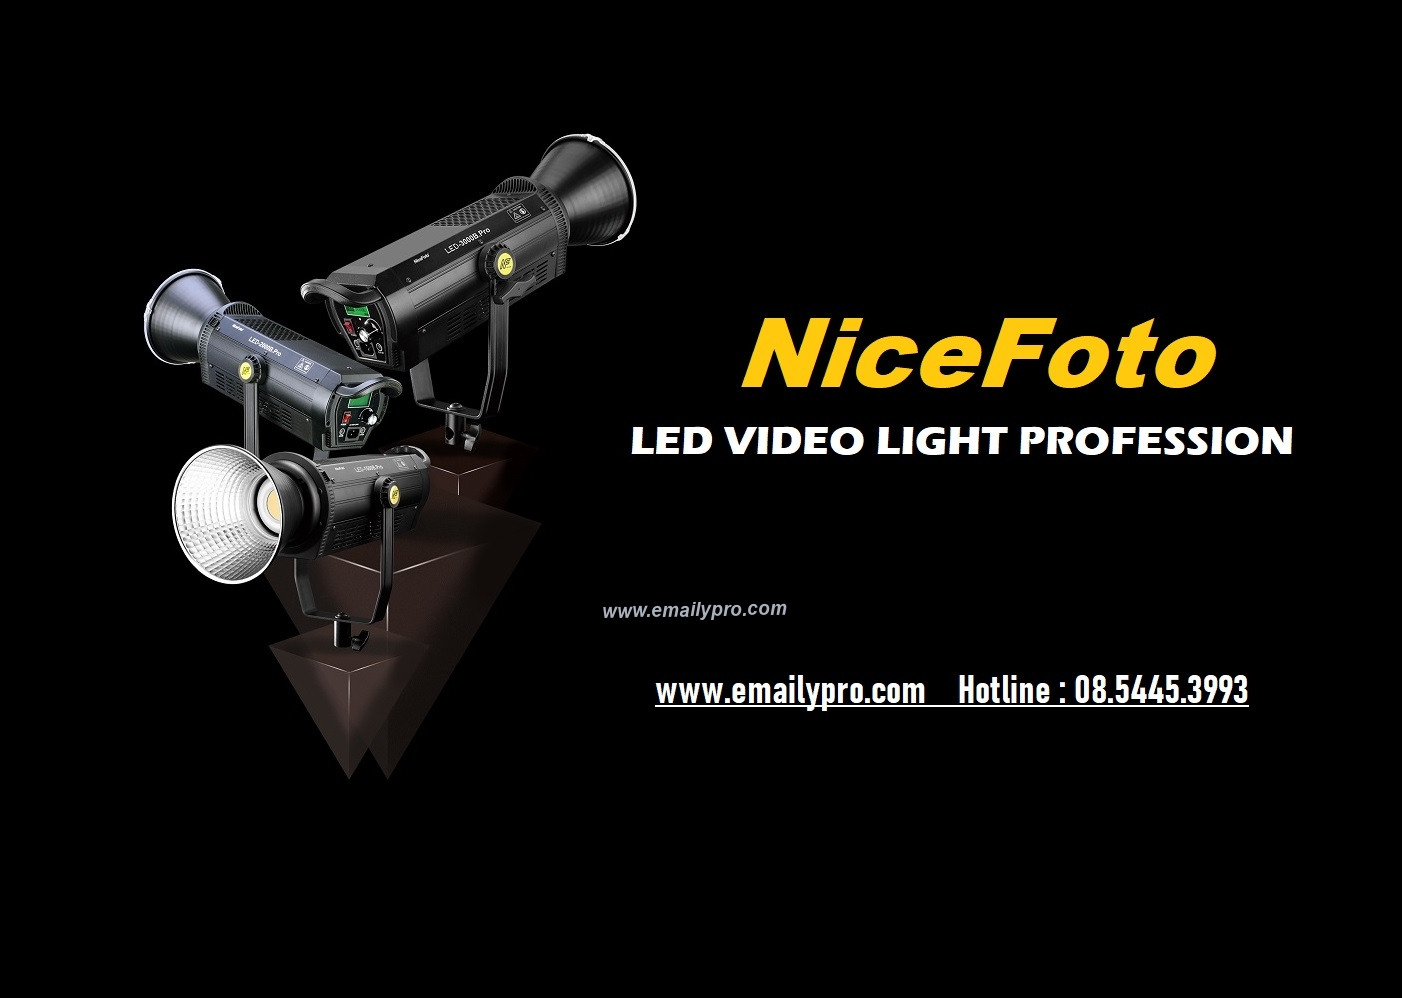 NICEFOTO Ra mắt sản phẩm  LED-3000B Pro Video Light